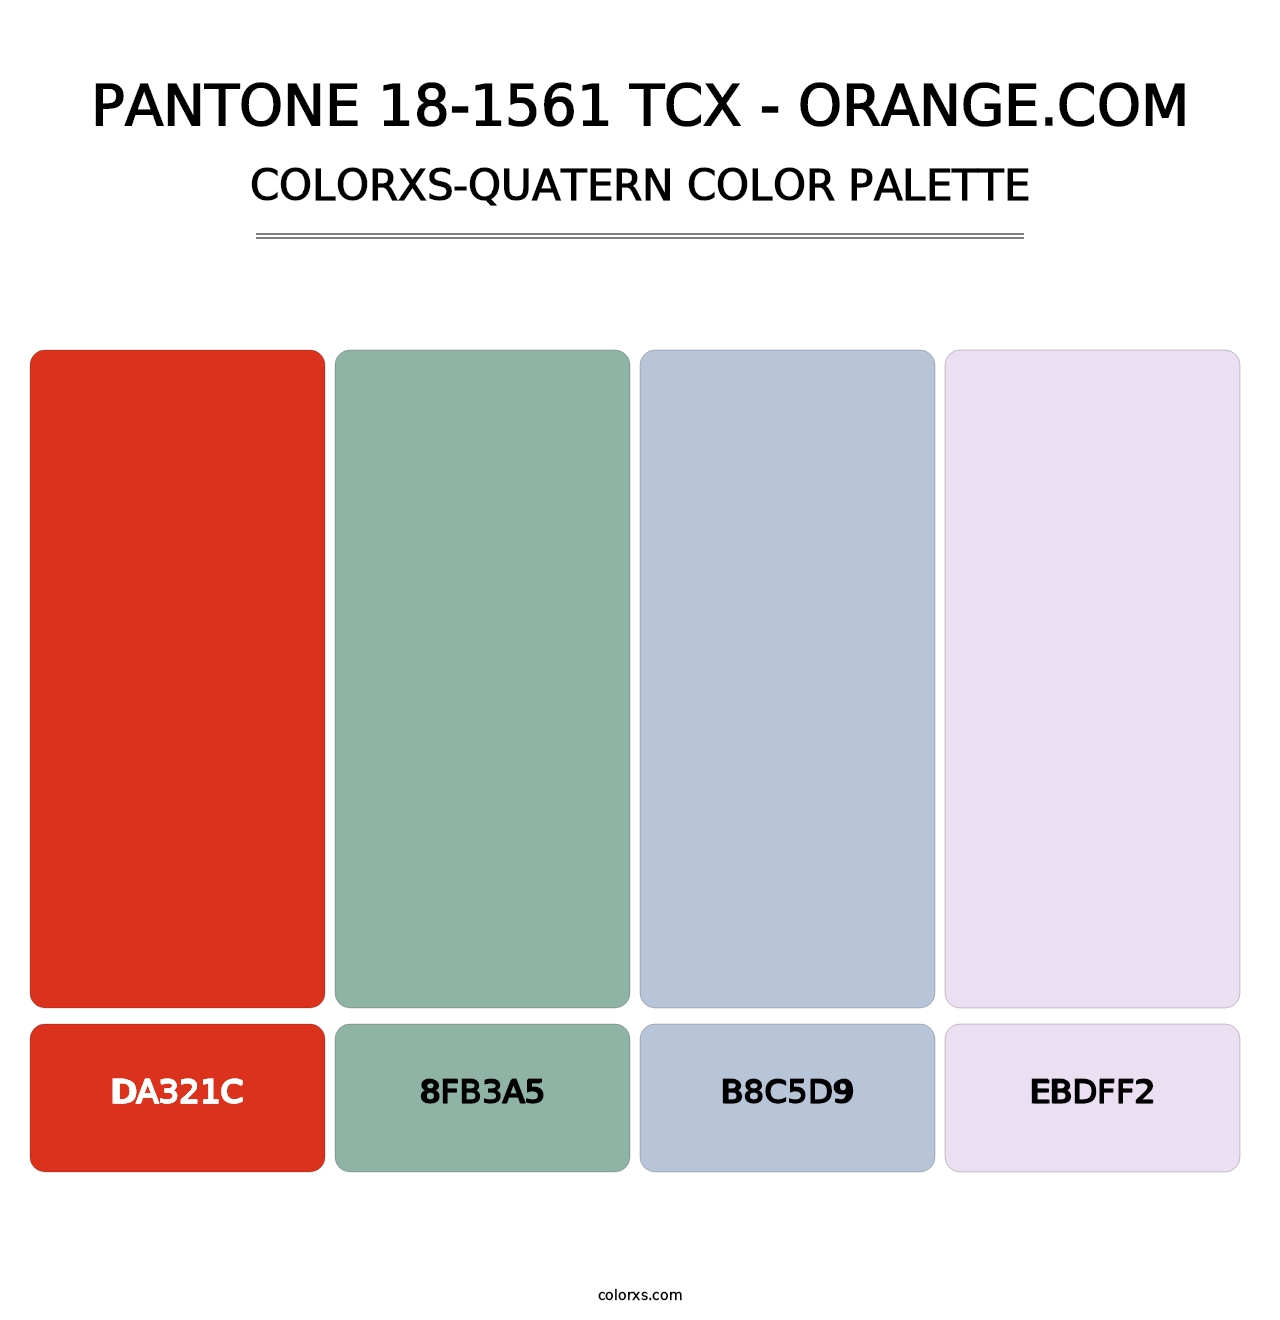 PANTONE 18-1561 TCX - Orange.com - Colorxs Quatern Palette